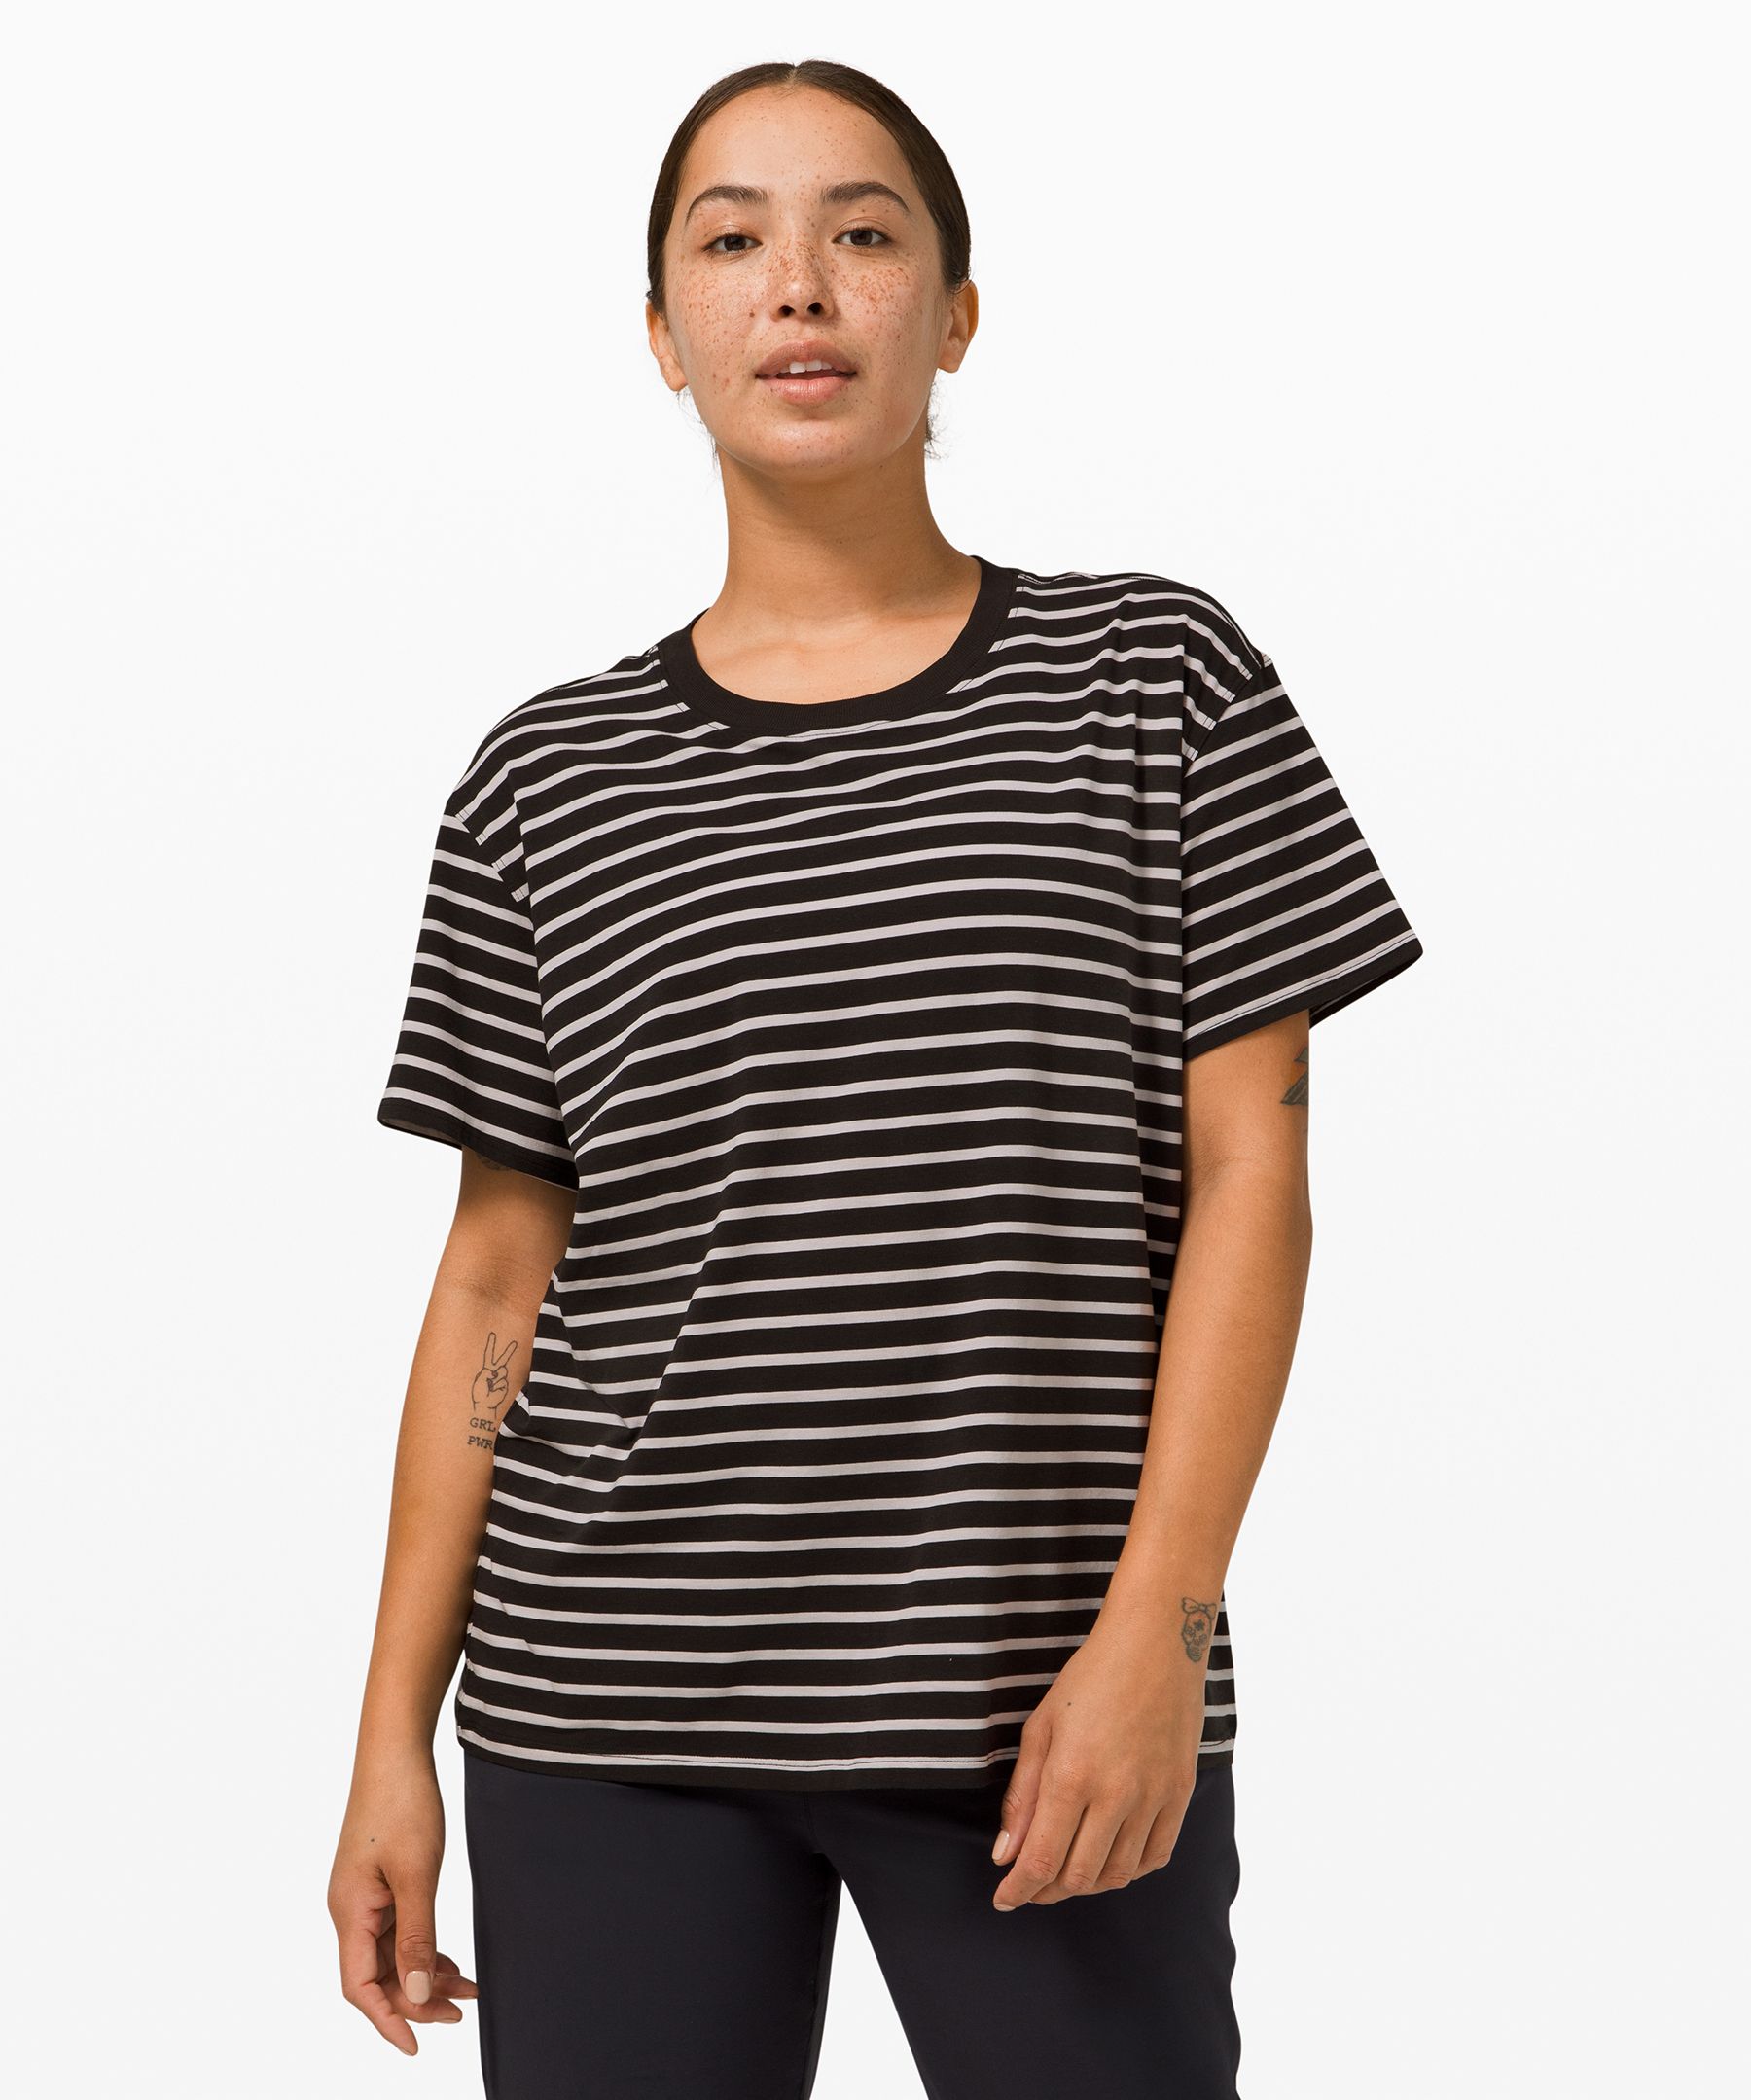 Lululemon All Yours Short Sleeve T-shirt In Yachtie Stripe Black Chrome